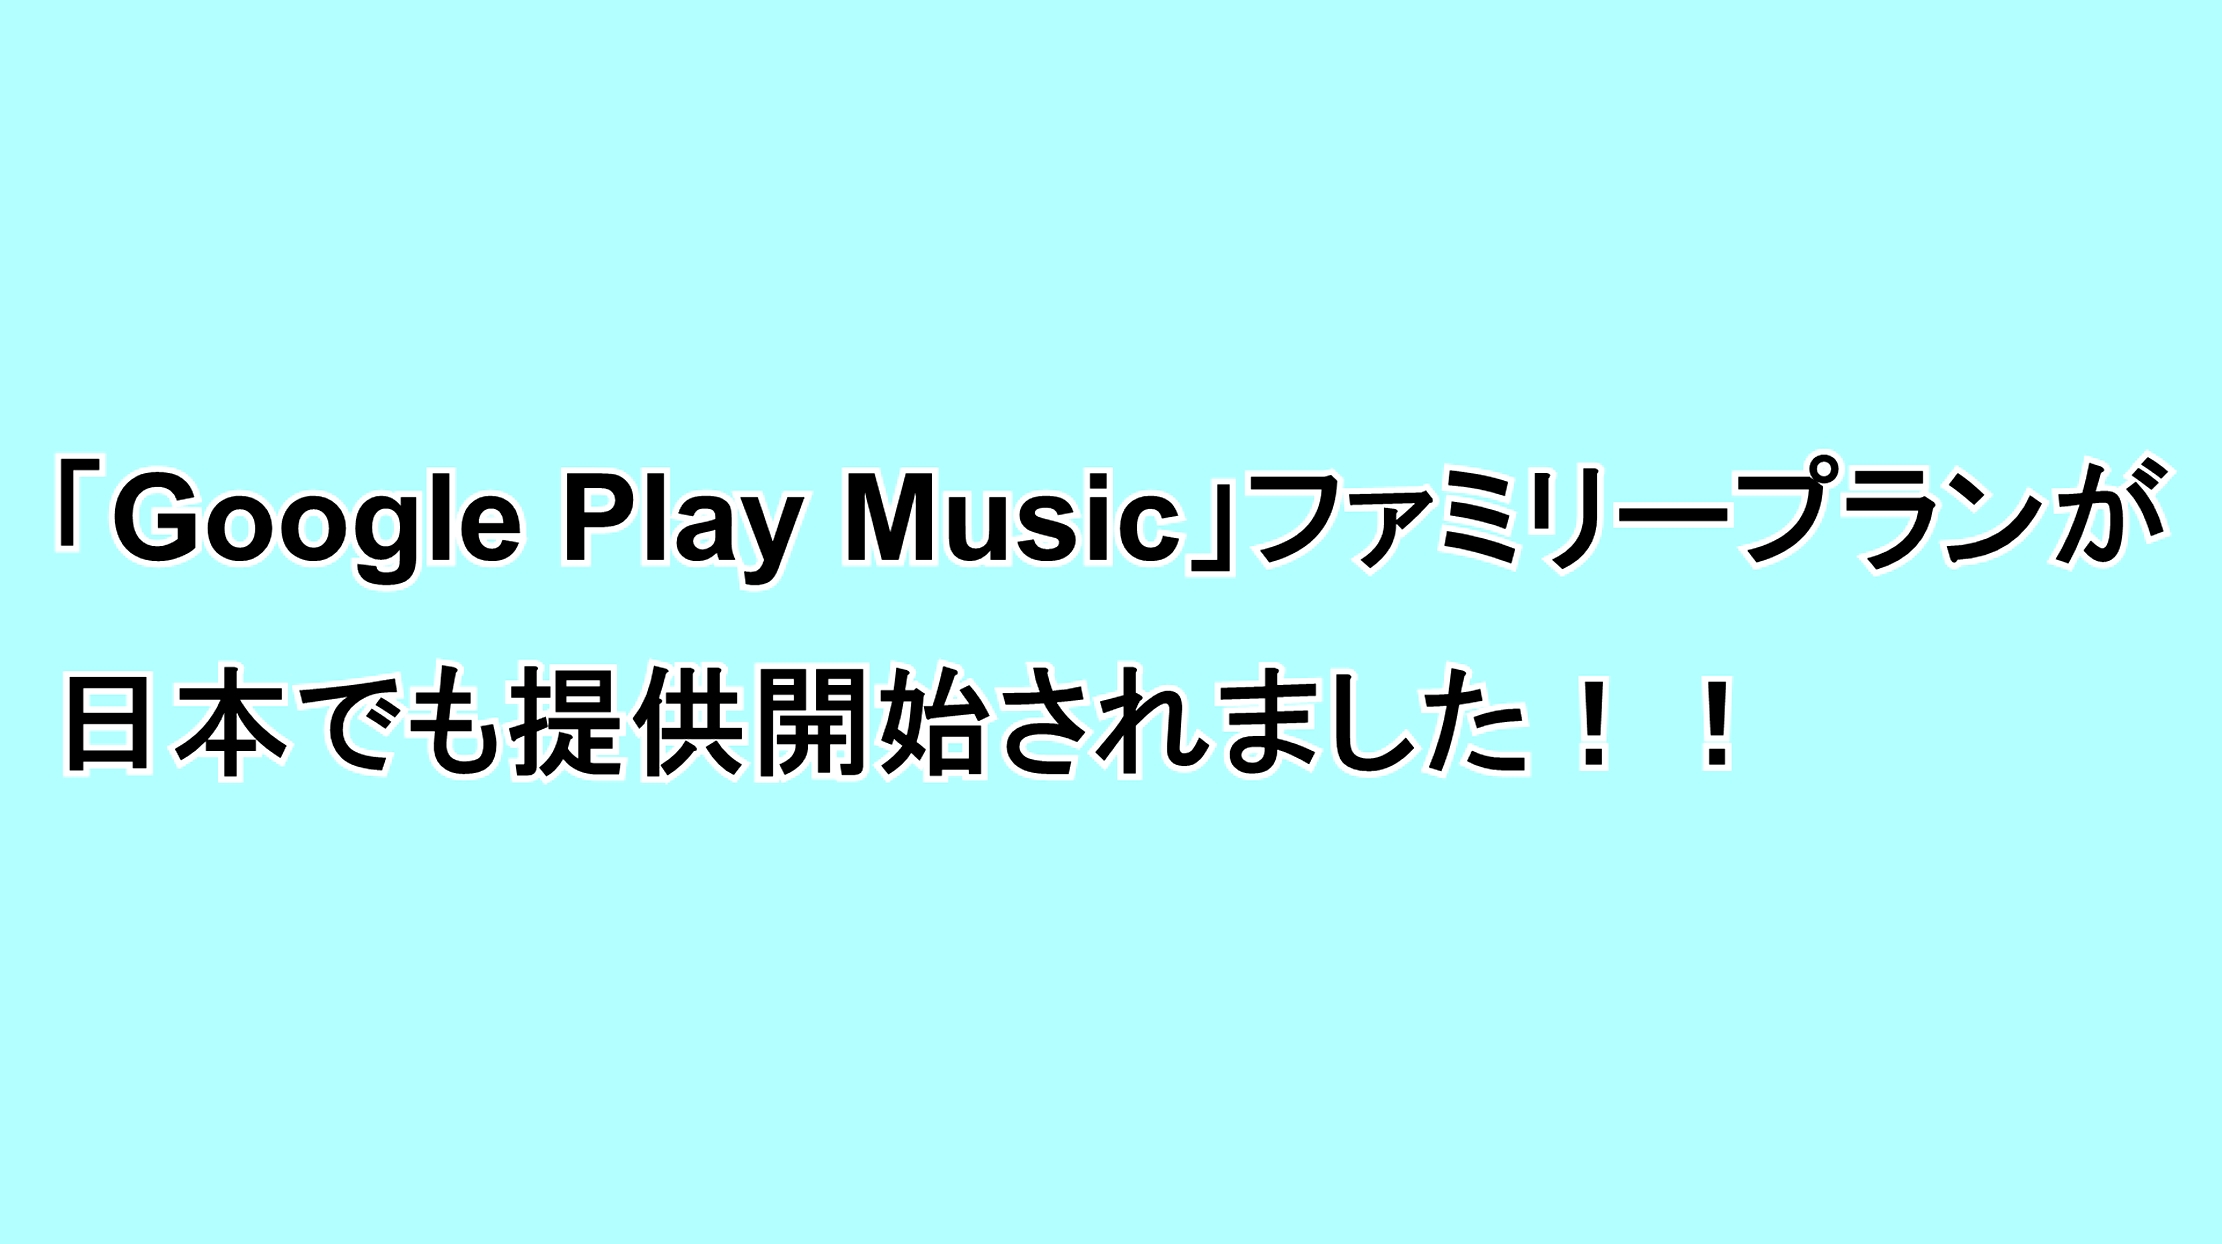 「Google Play Music」ファミリープランが日本でも提供開始されました